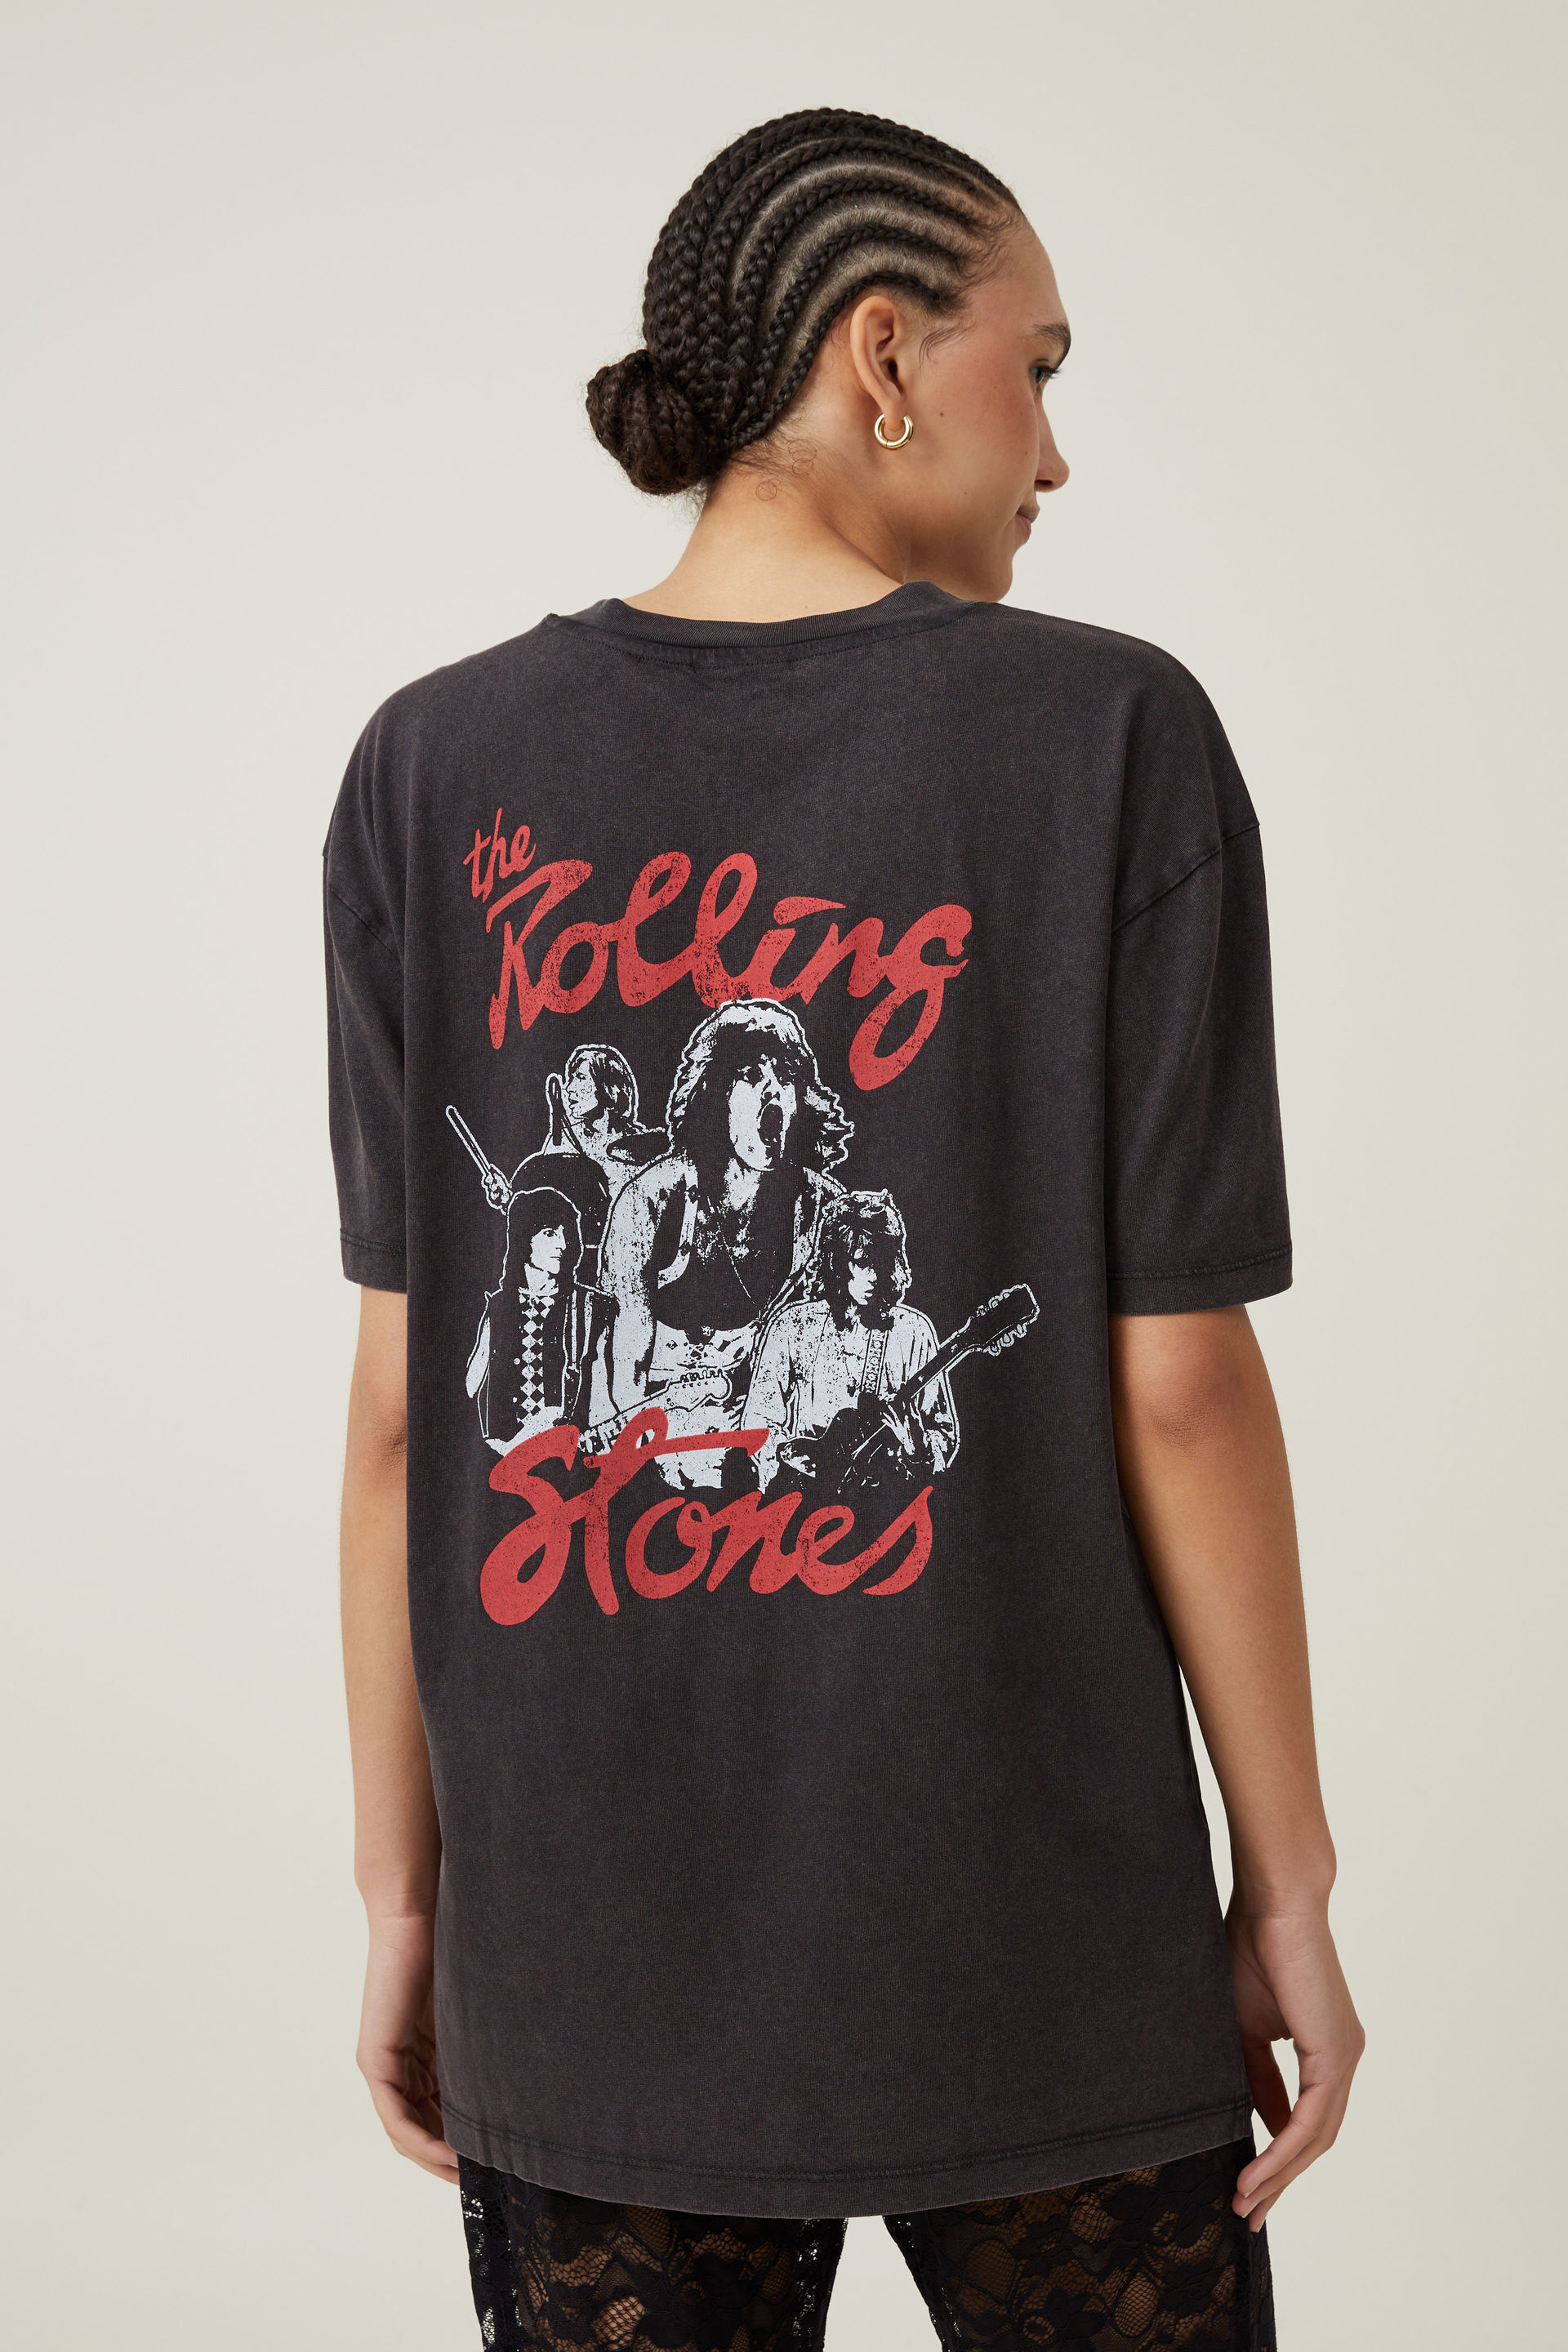 The Oversized Rolling Stones Tee